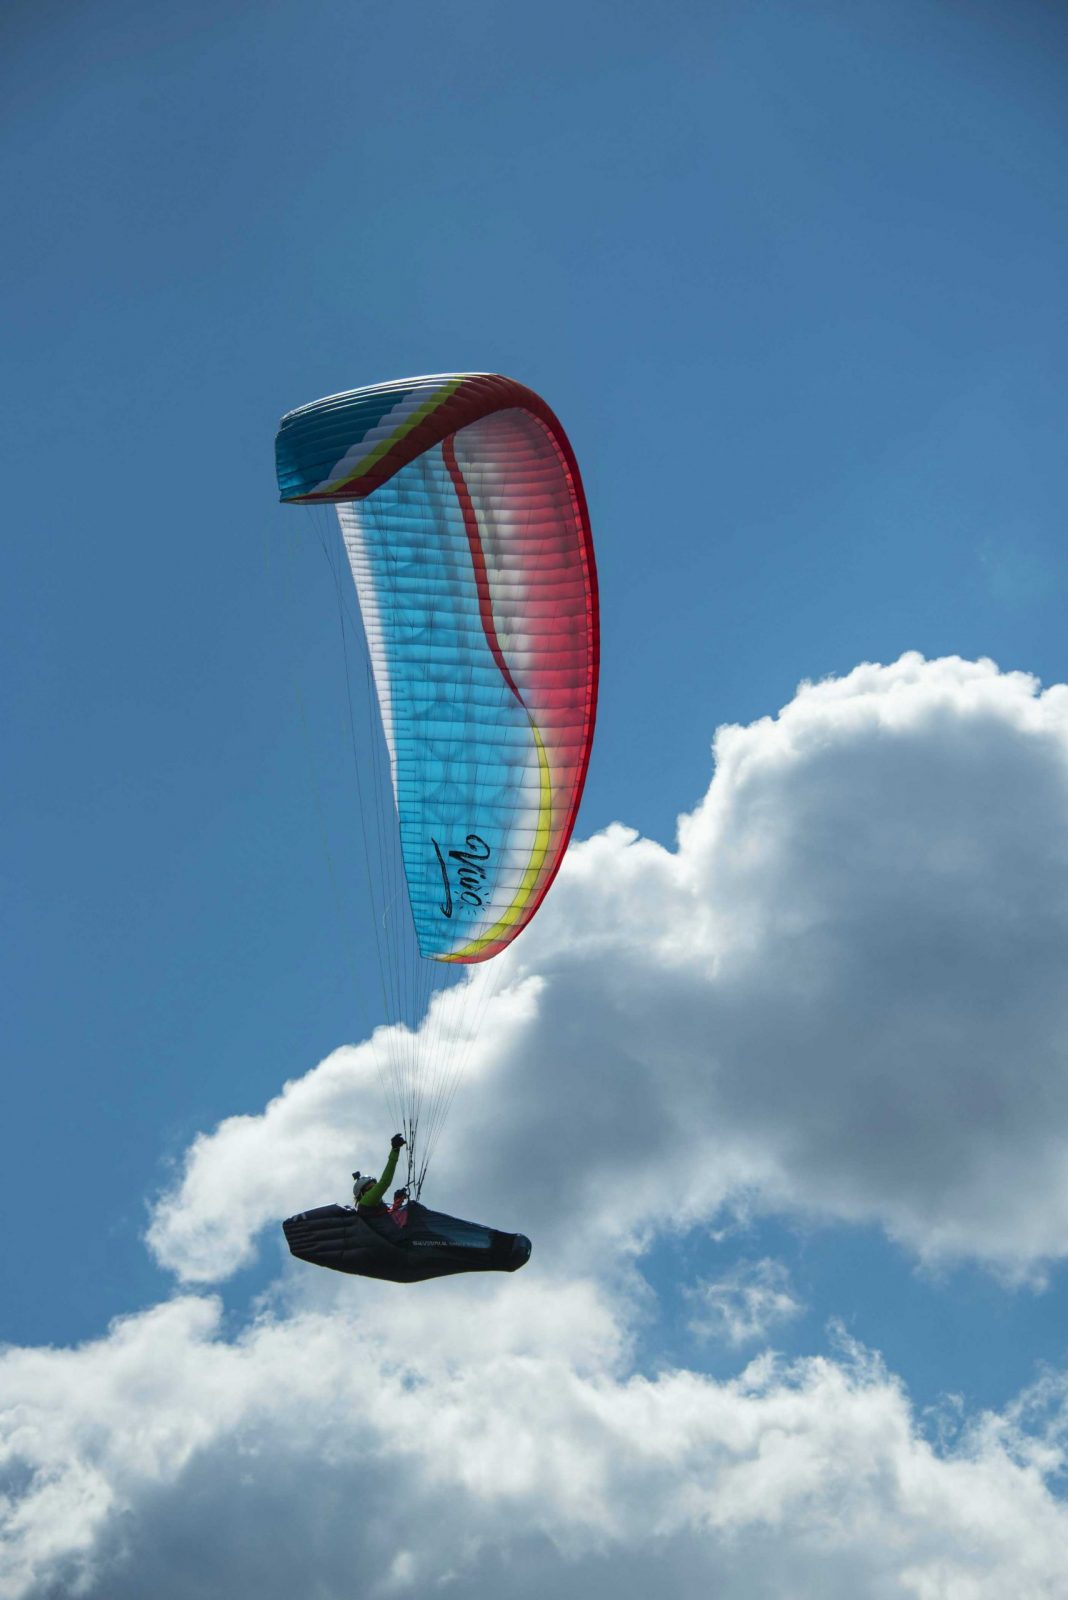 New paraglider AirDesign Vivo for sale